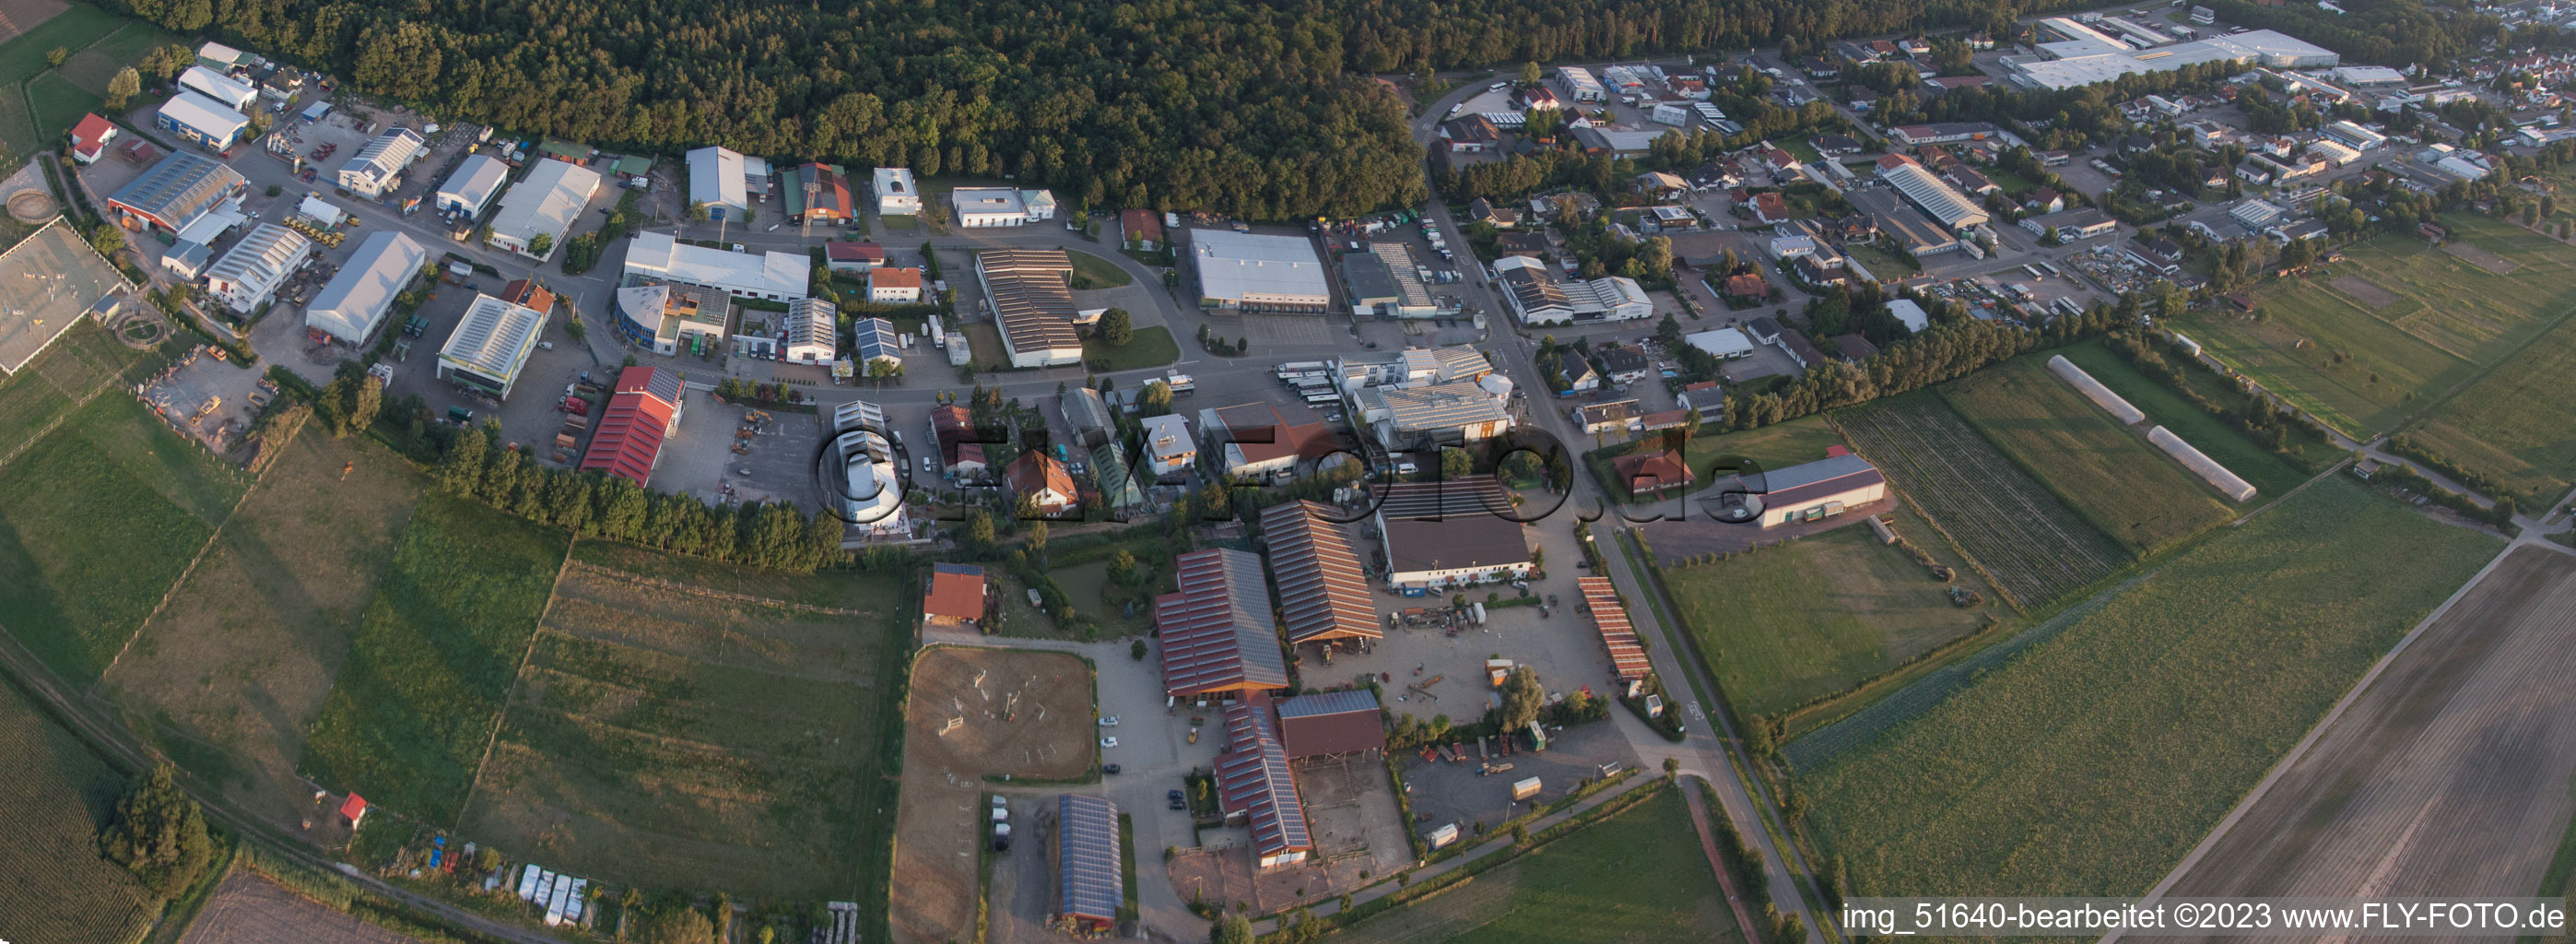 Bird's eye view of Gäxwald industrial area in the district Herxheim in Herxheim bei Landau/Pfalz in the state Rhineland-Palatinate, Germany